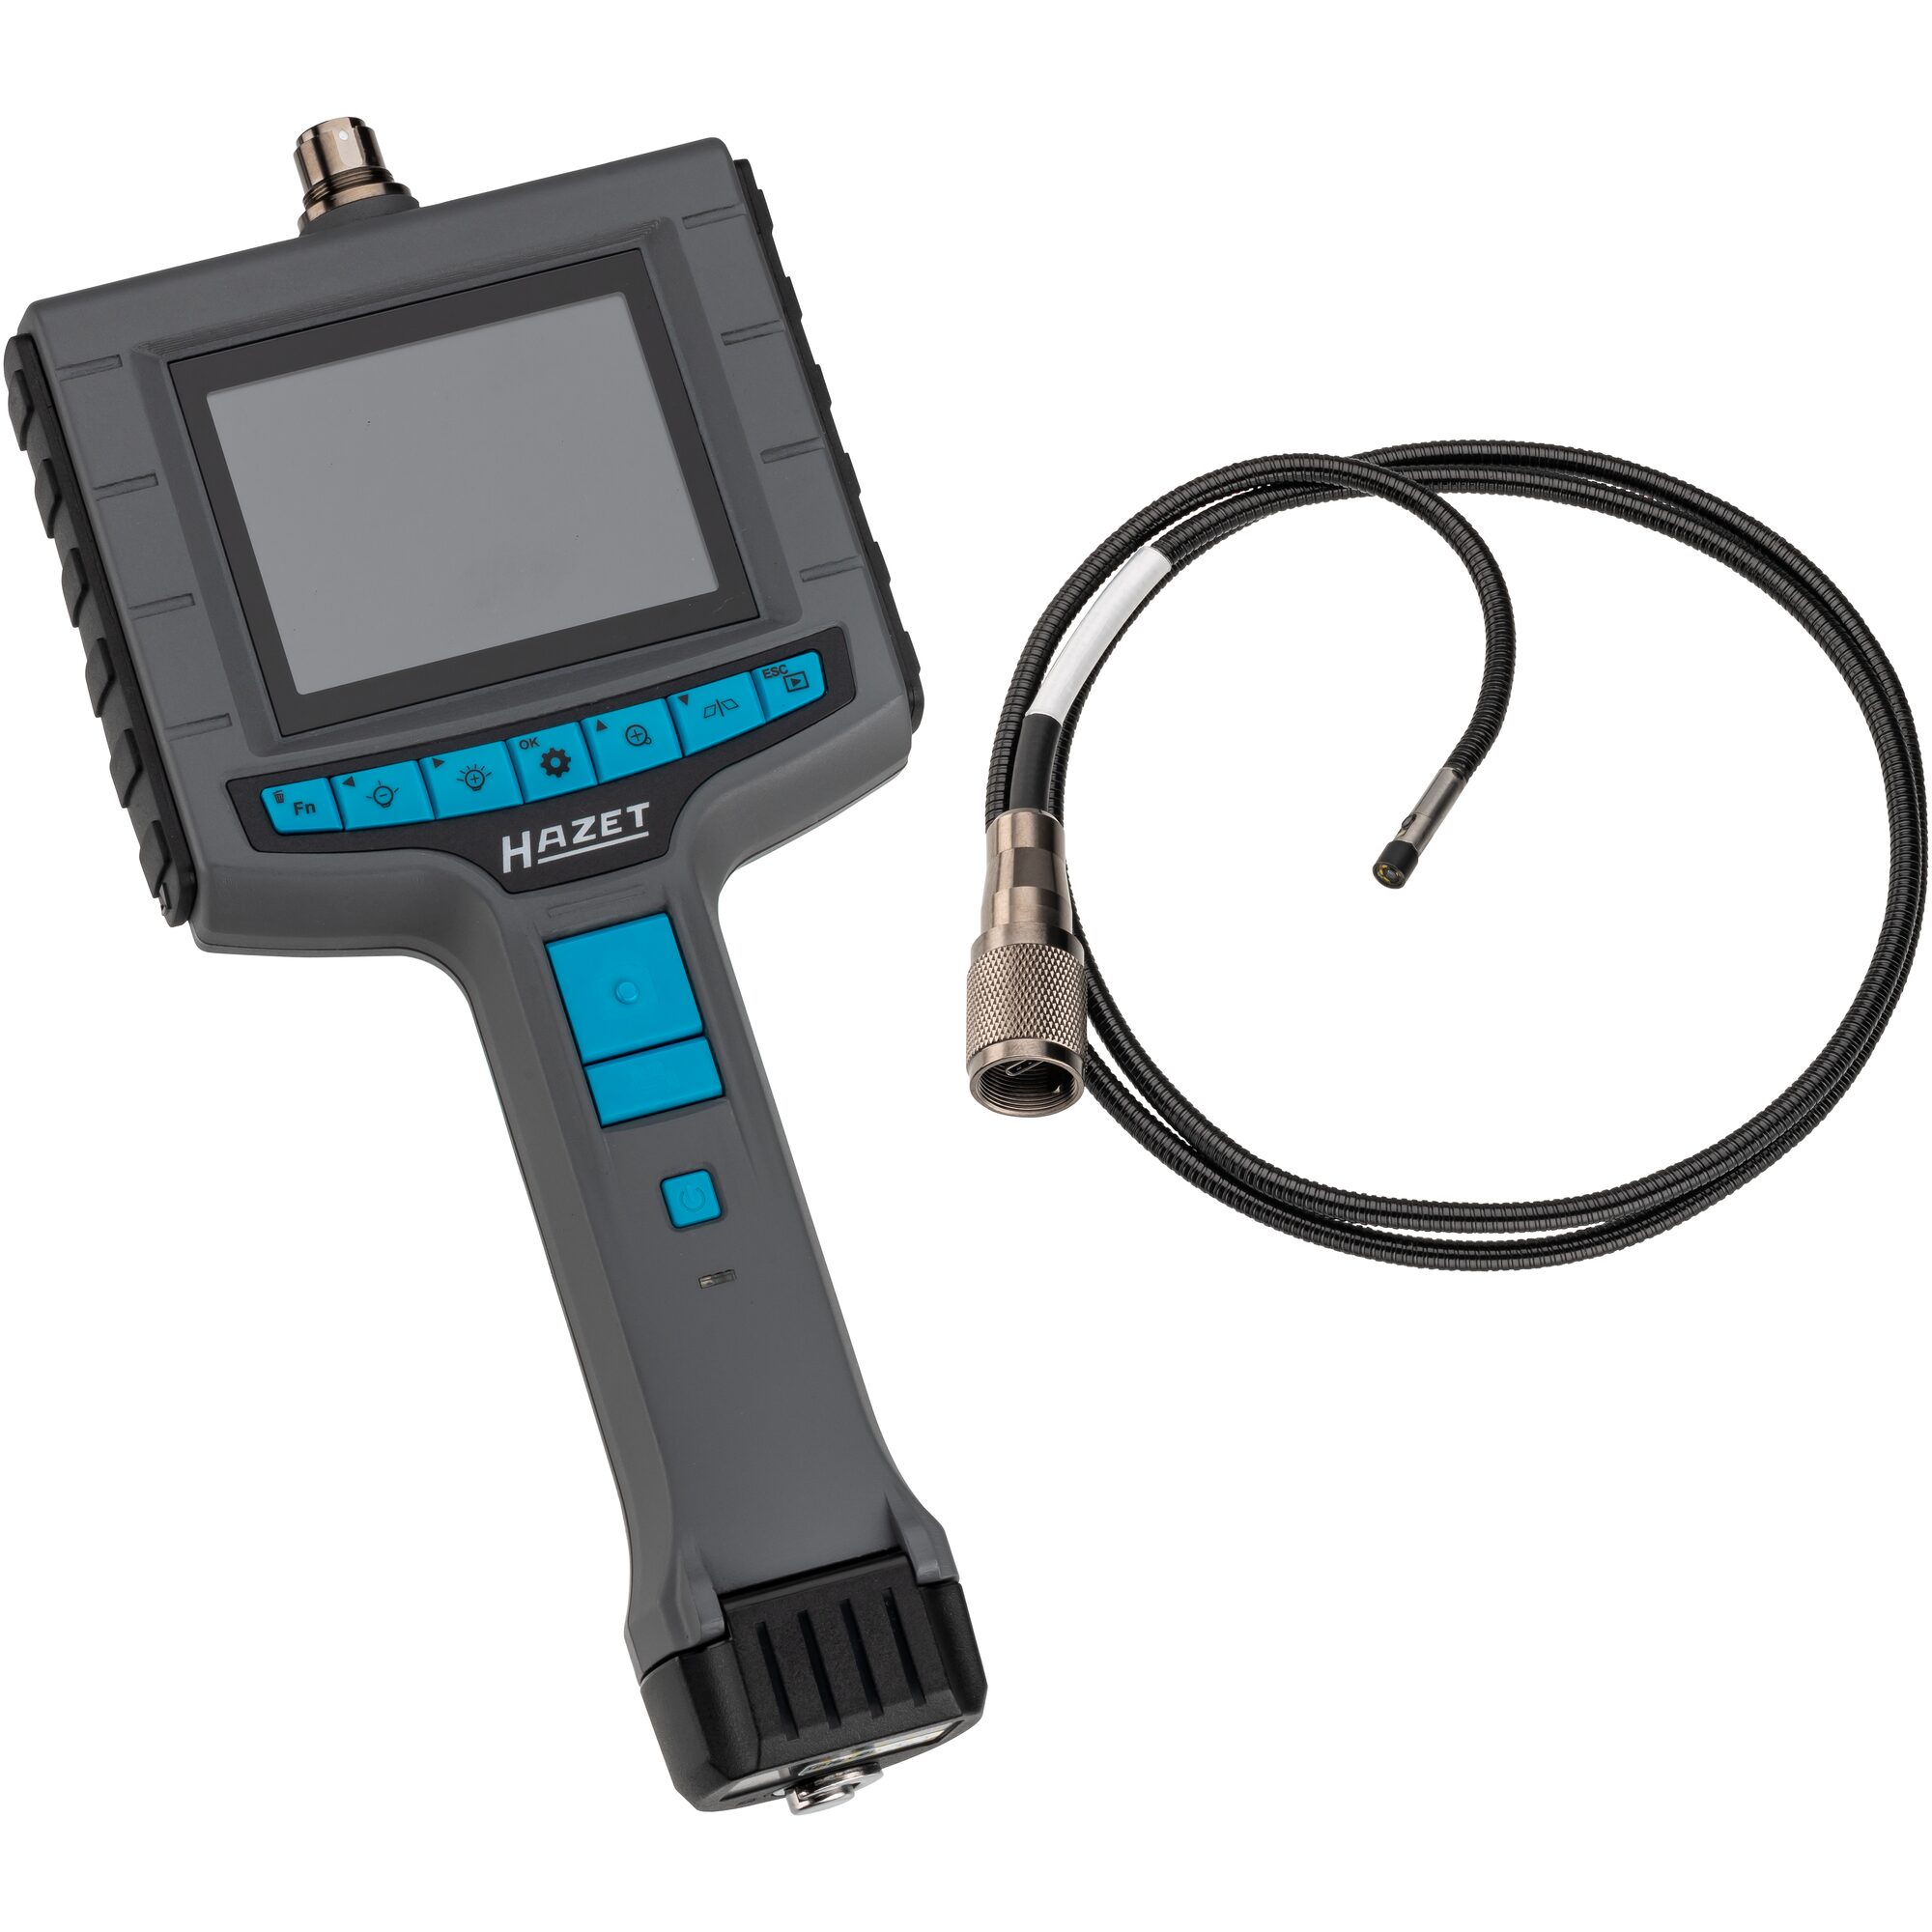 HZ 4812-23 - 5AF: Digital Endoskop, schwenkbarer Kamerakopf, 180°, 3,9 mm  bei reichelt elektronik